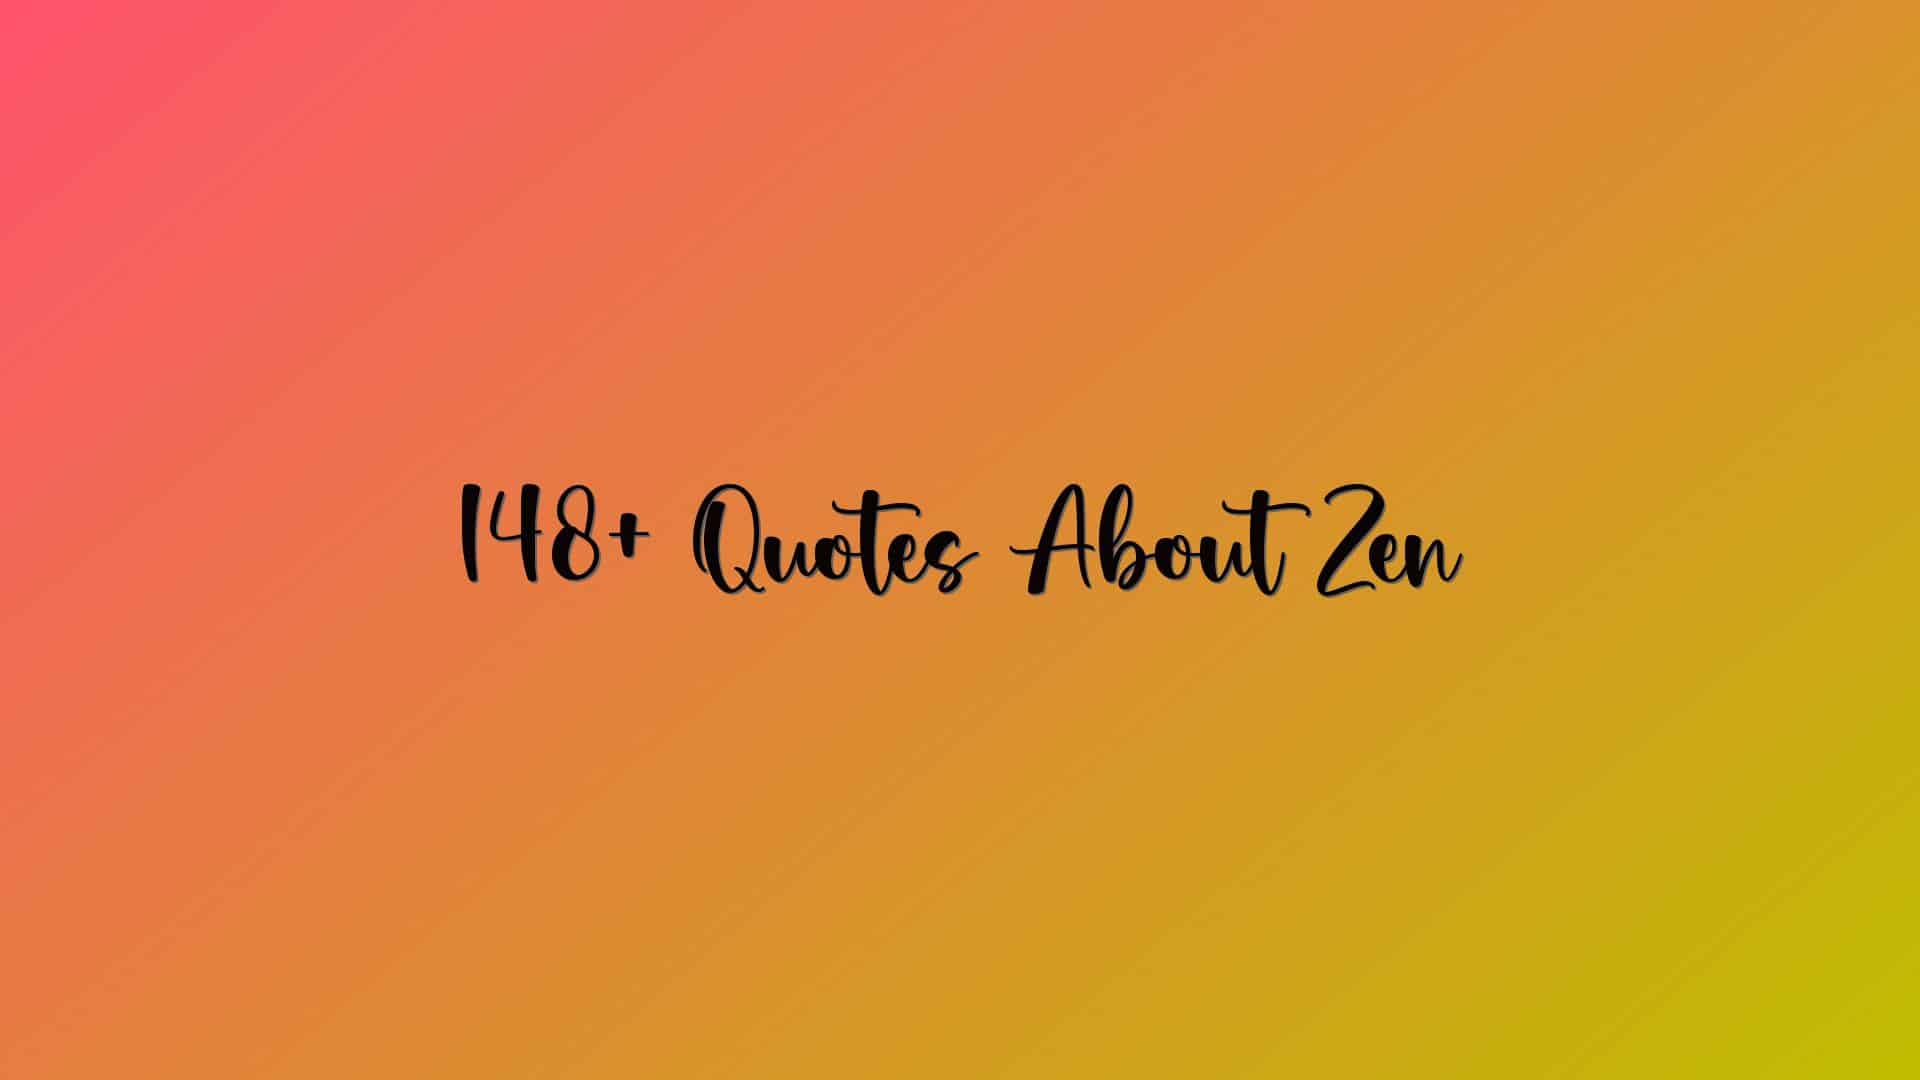 148+ Quotes About Zen